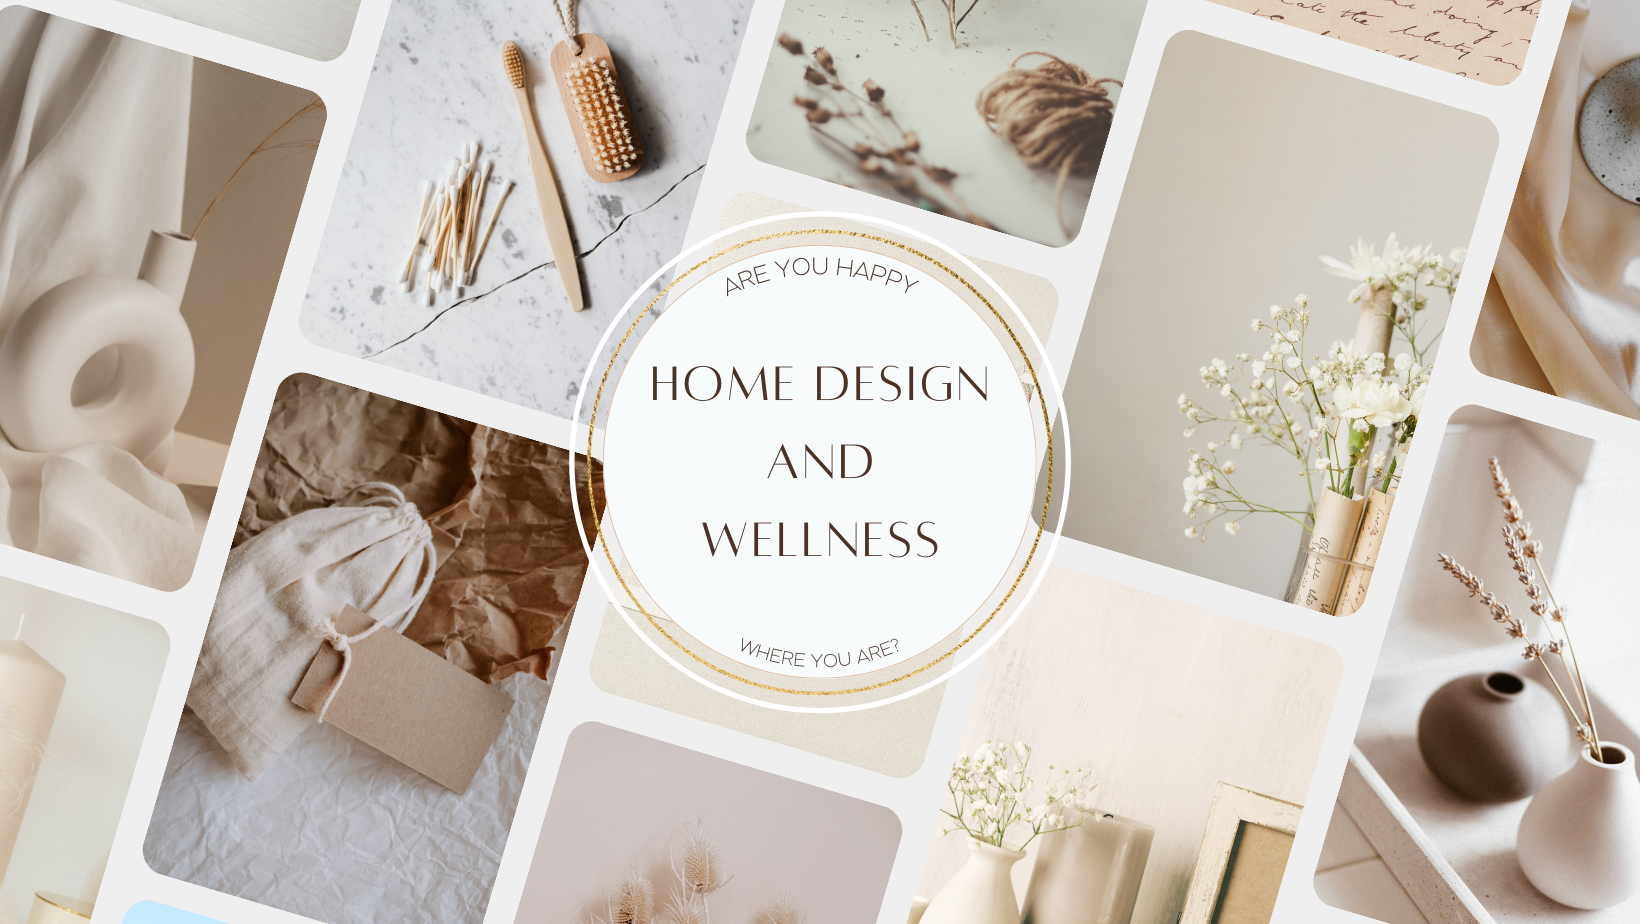 Home design and wellness